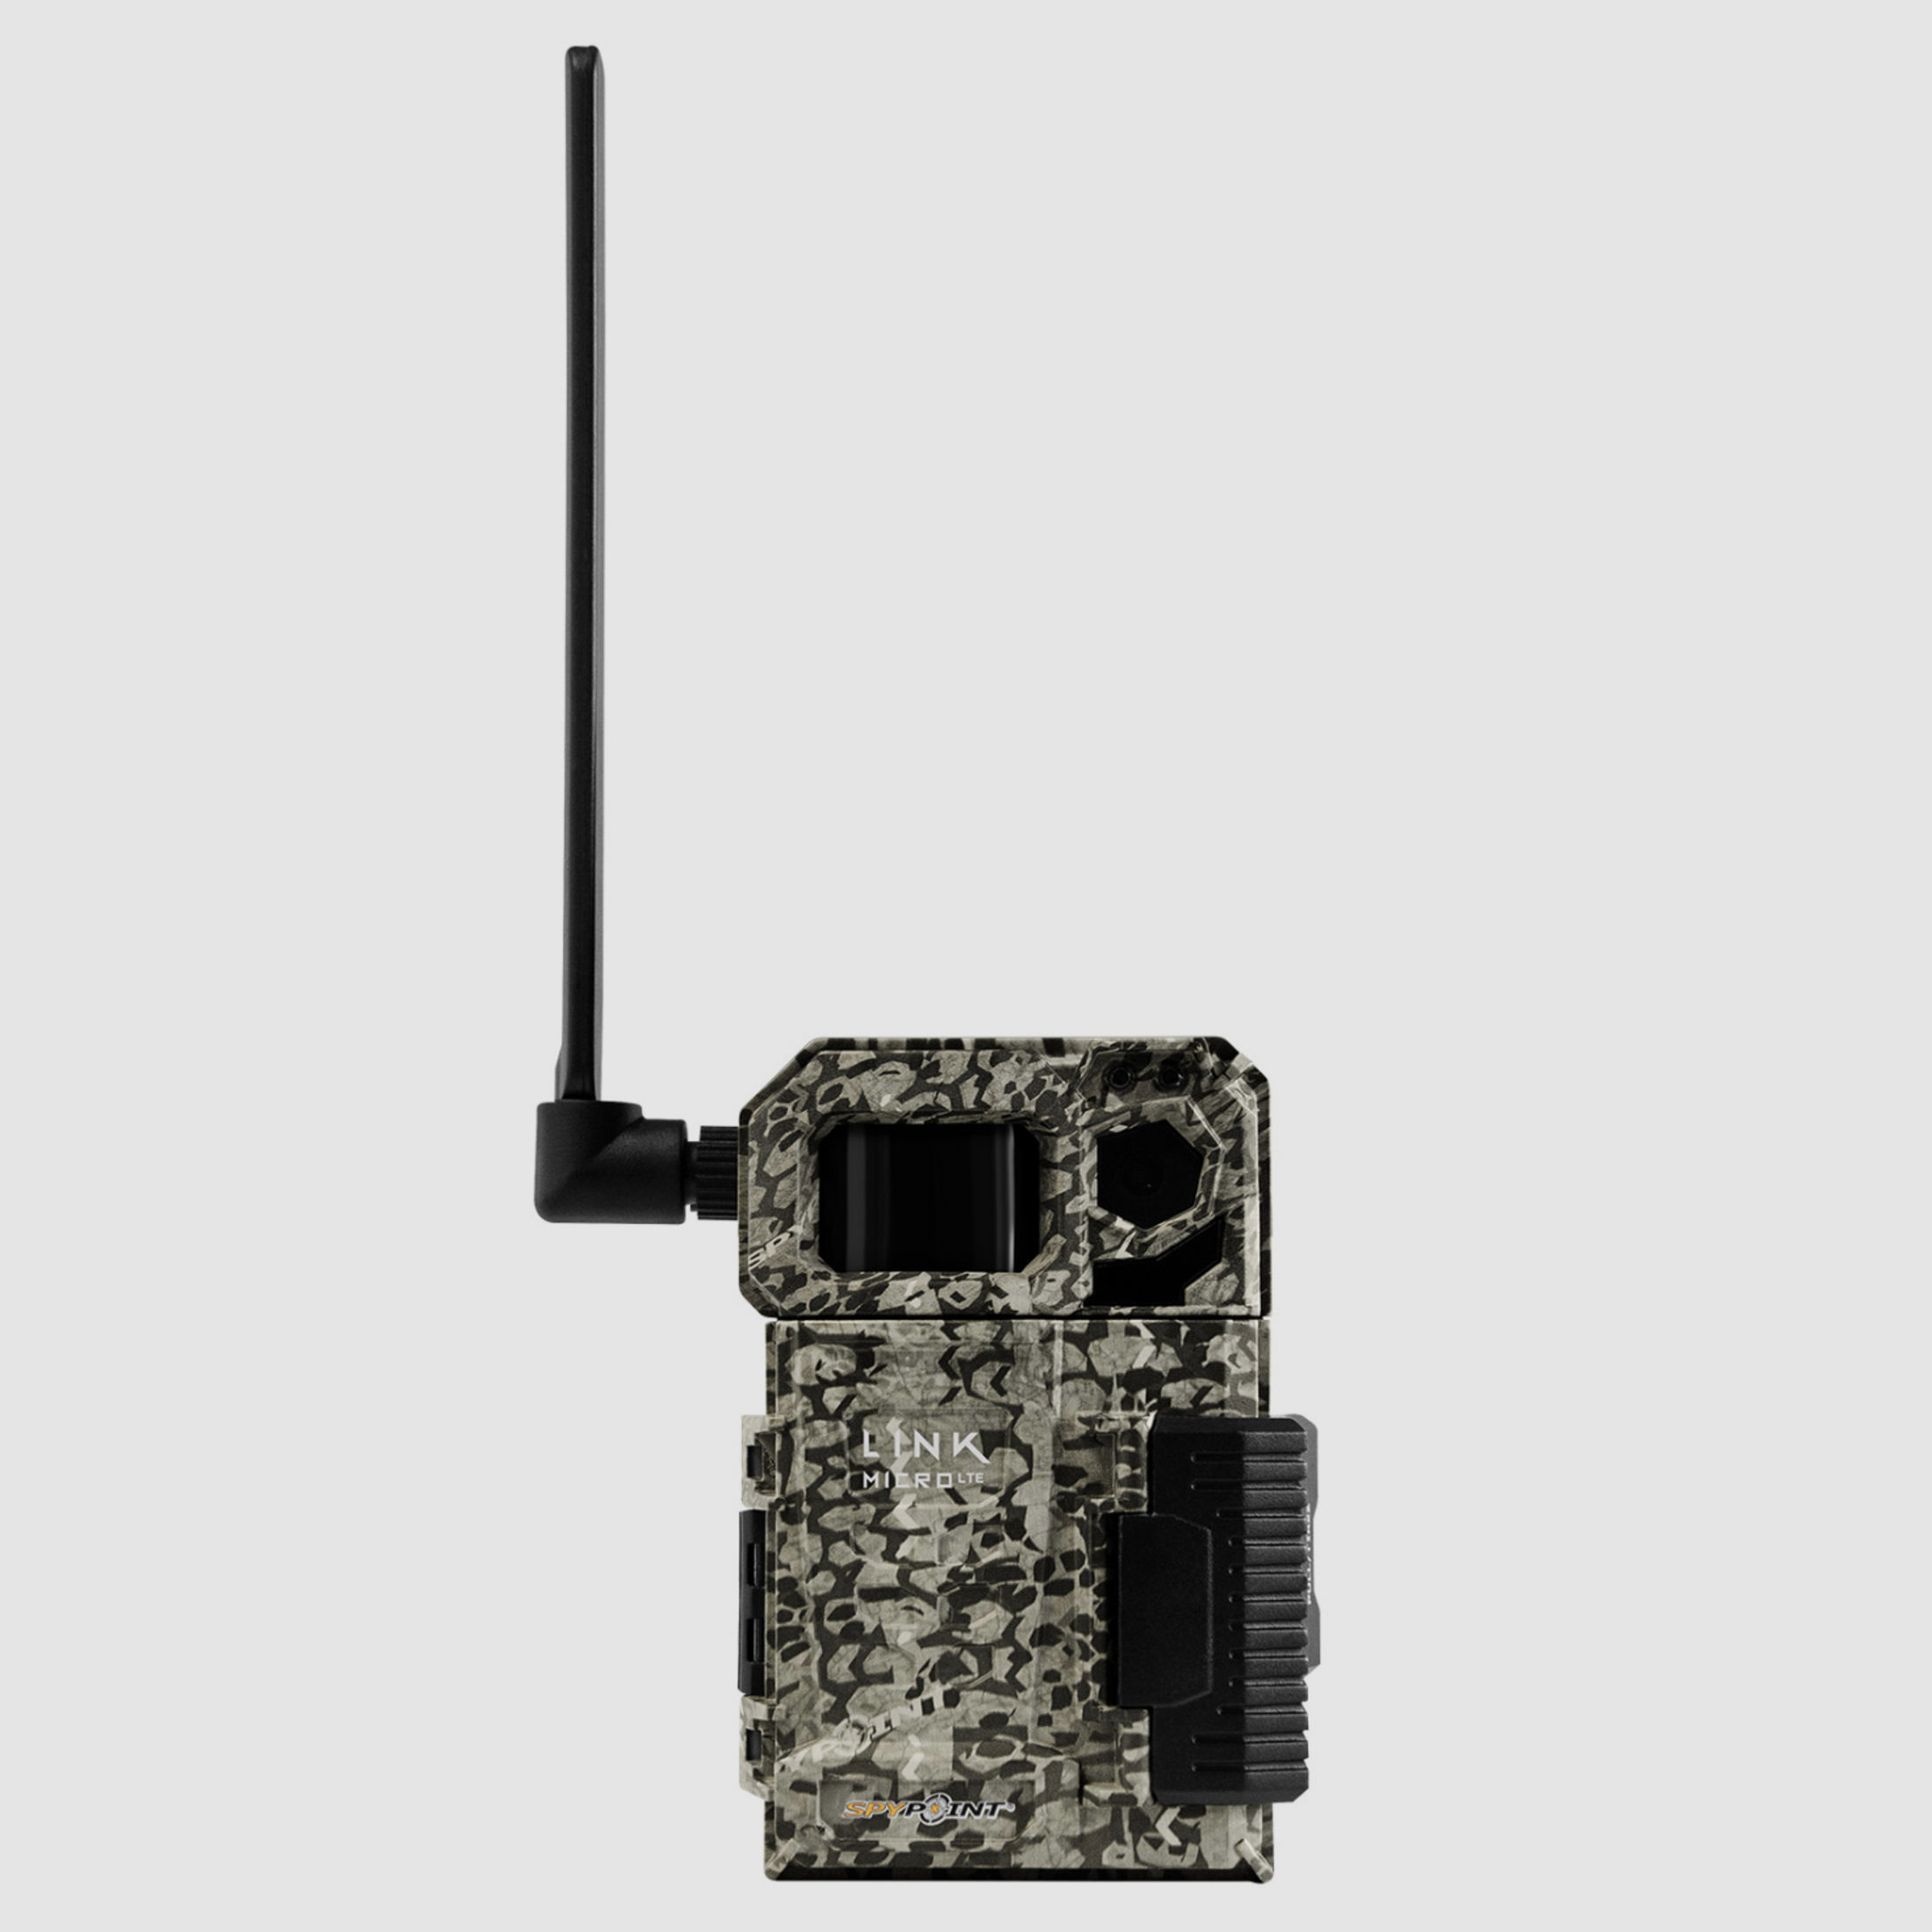 Spypoint Wildkamera LINK-MICRO LTE